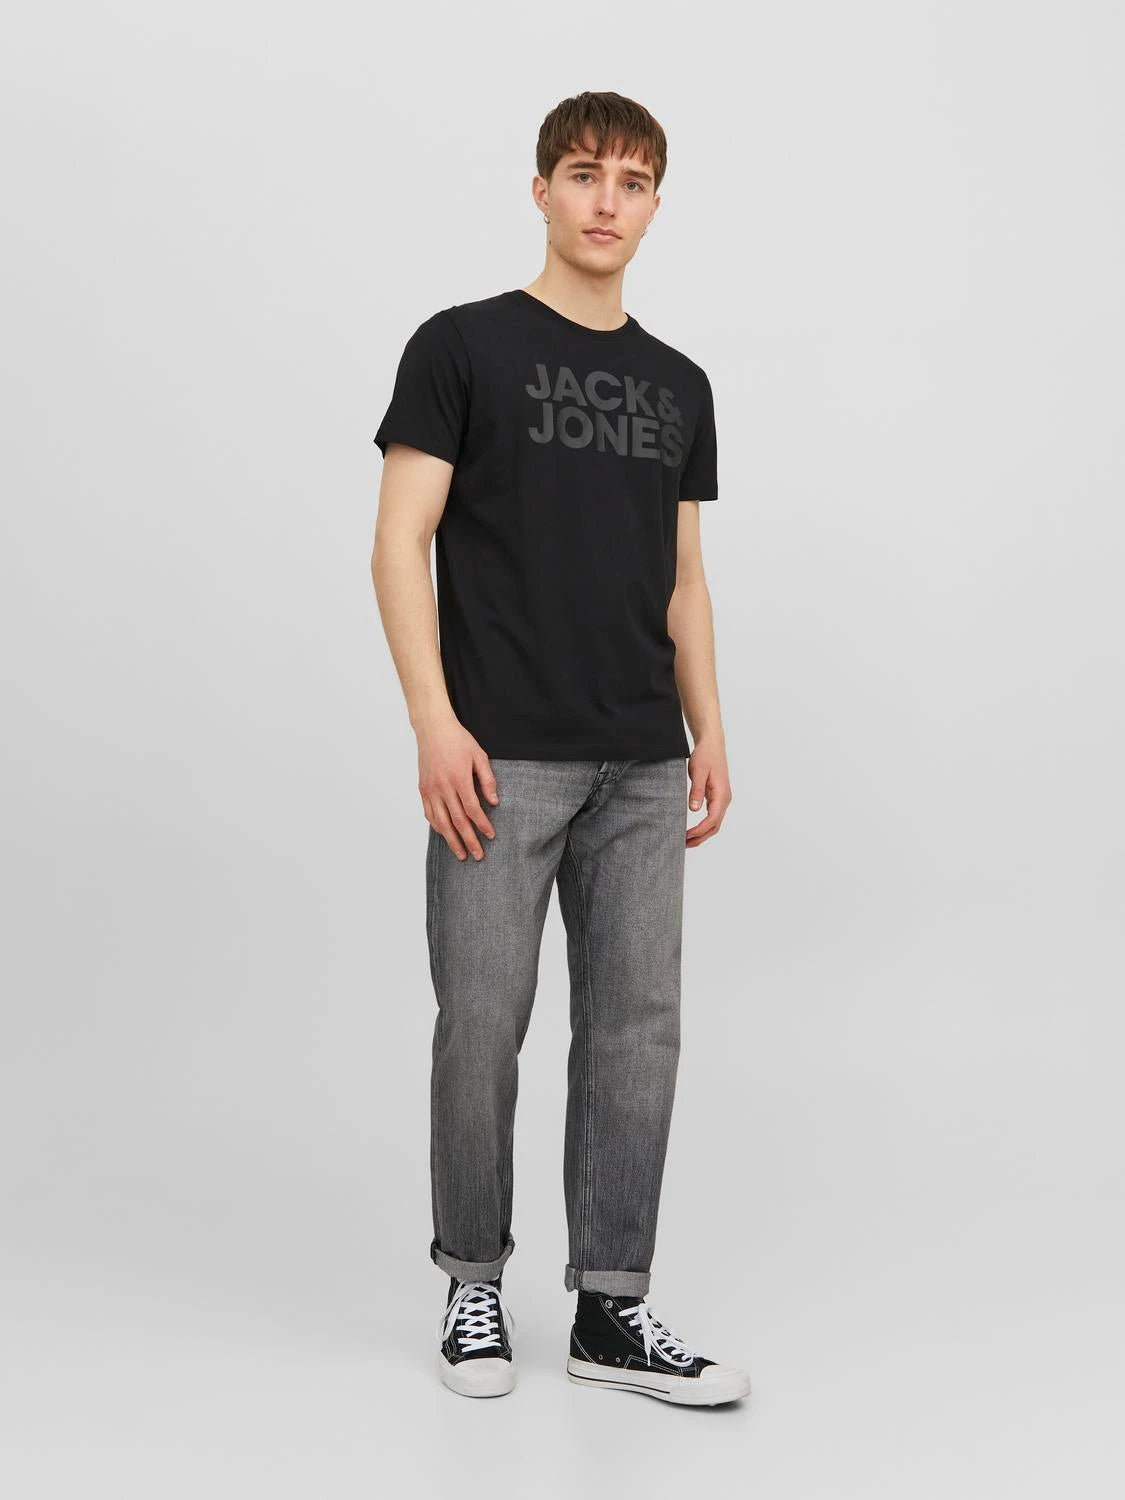 Jack&Jones black printed t-shirt for men